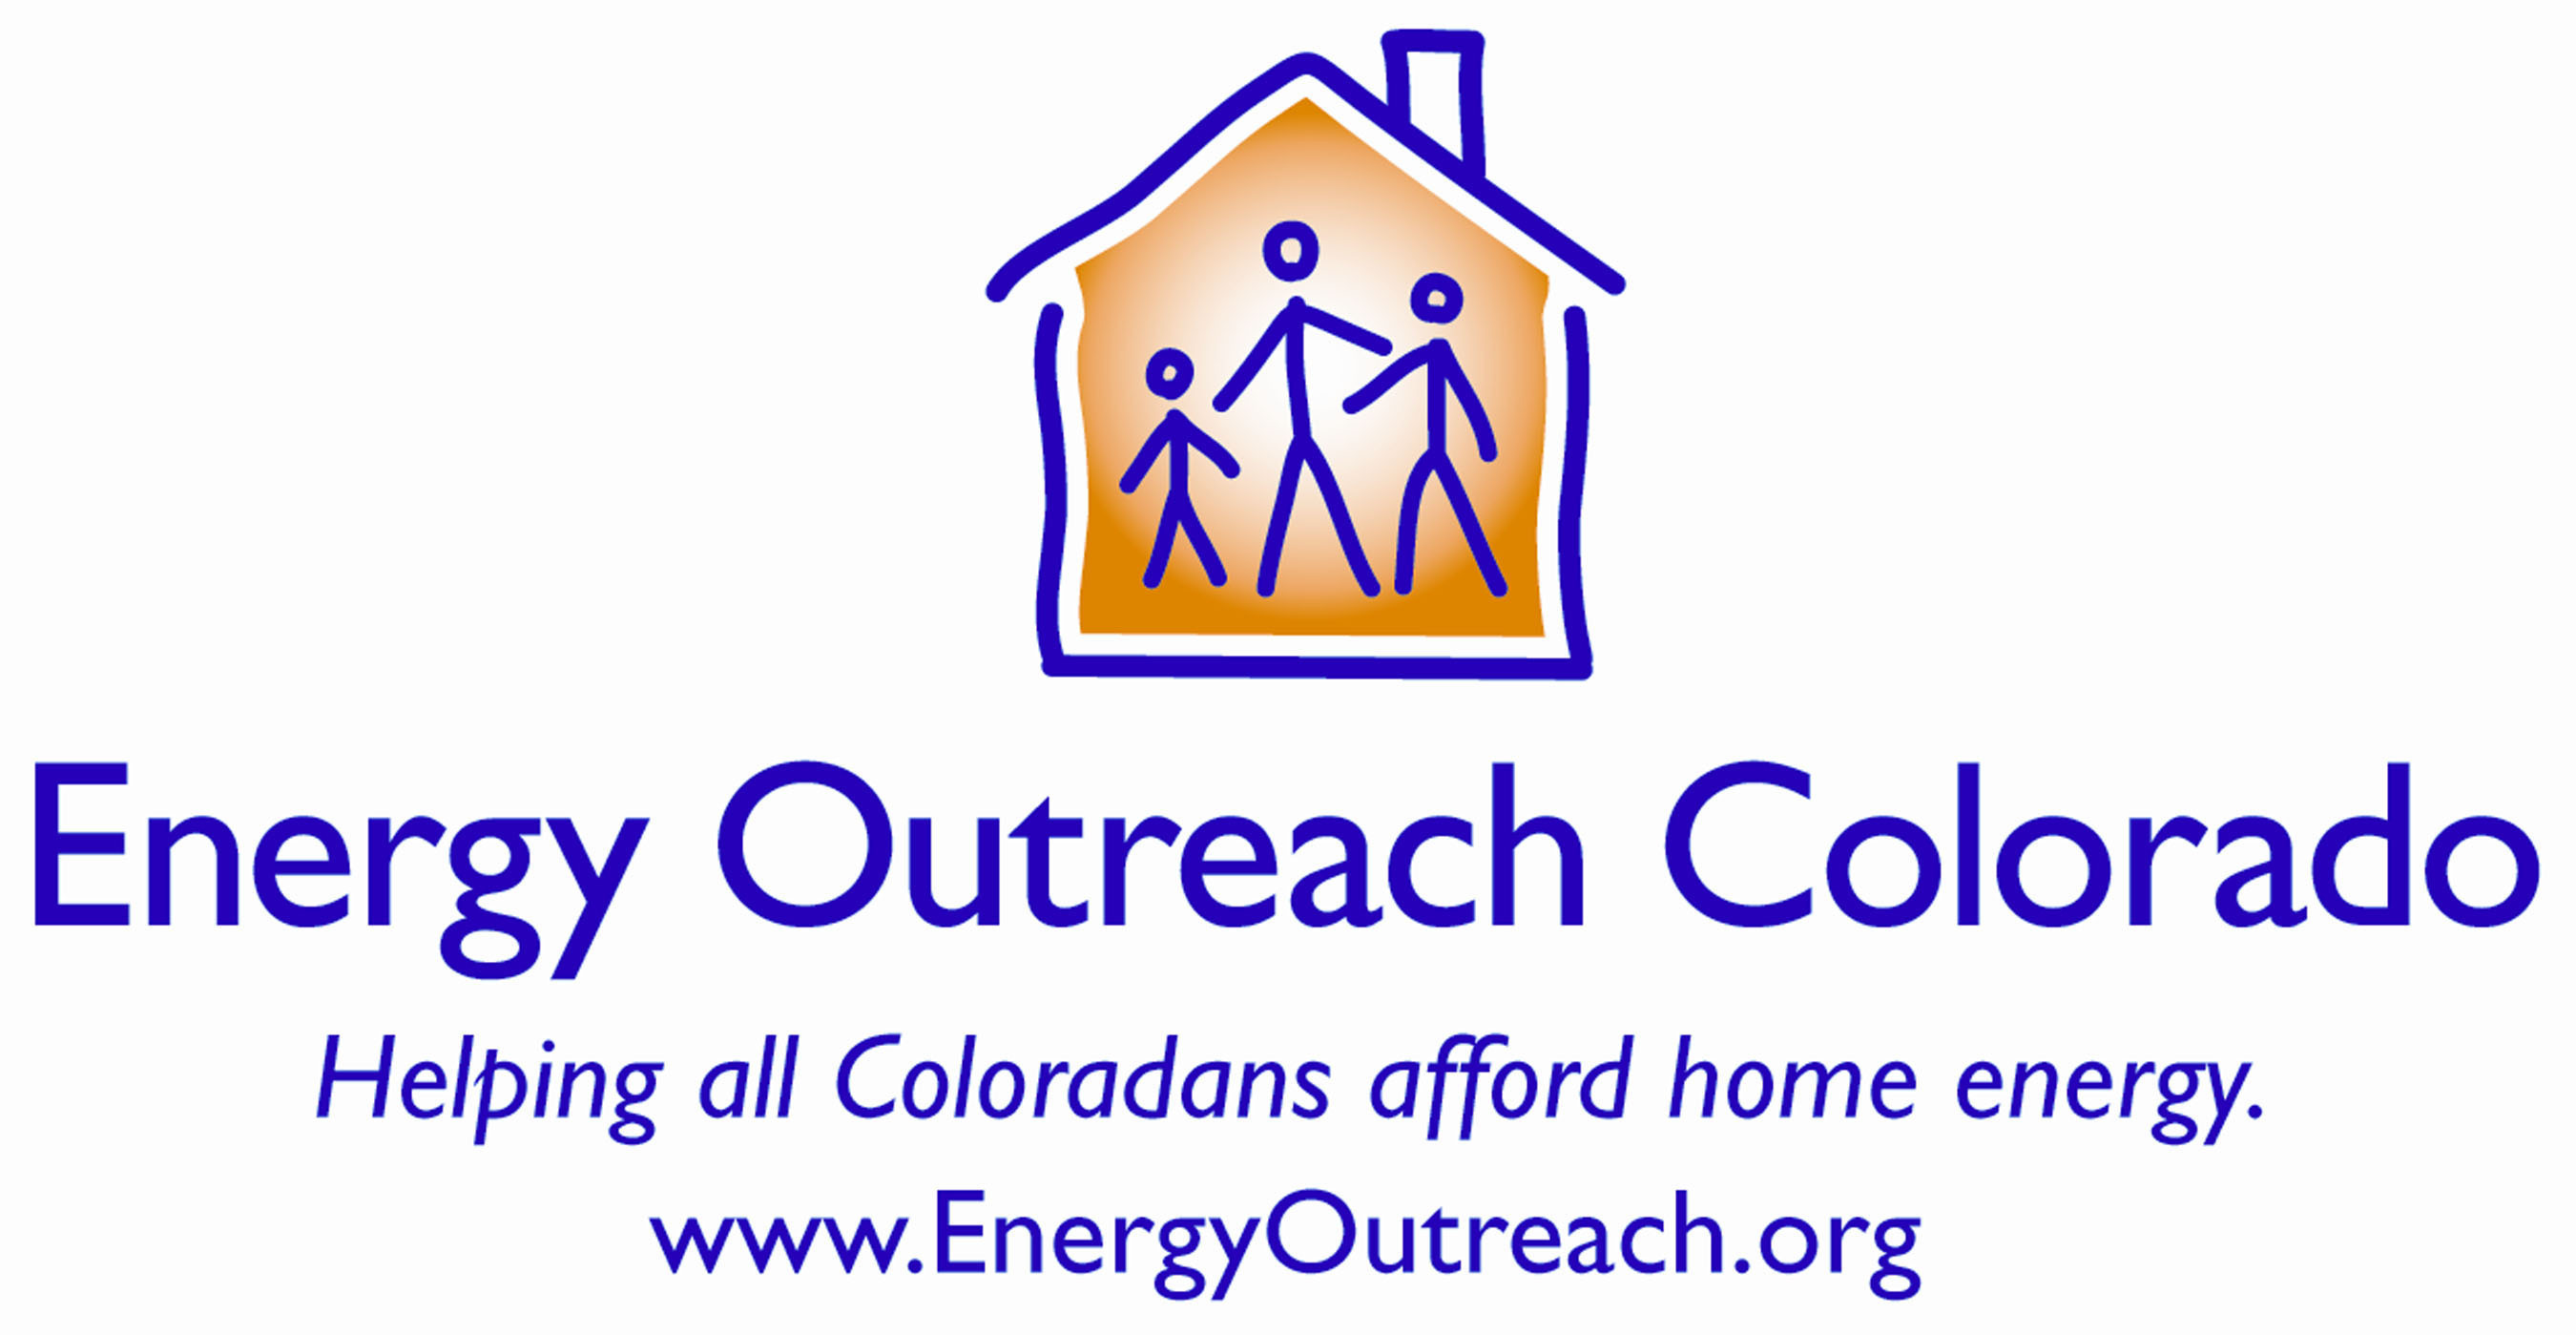 Energy Outreach Colorado logo.